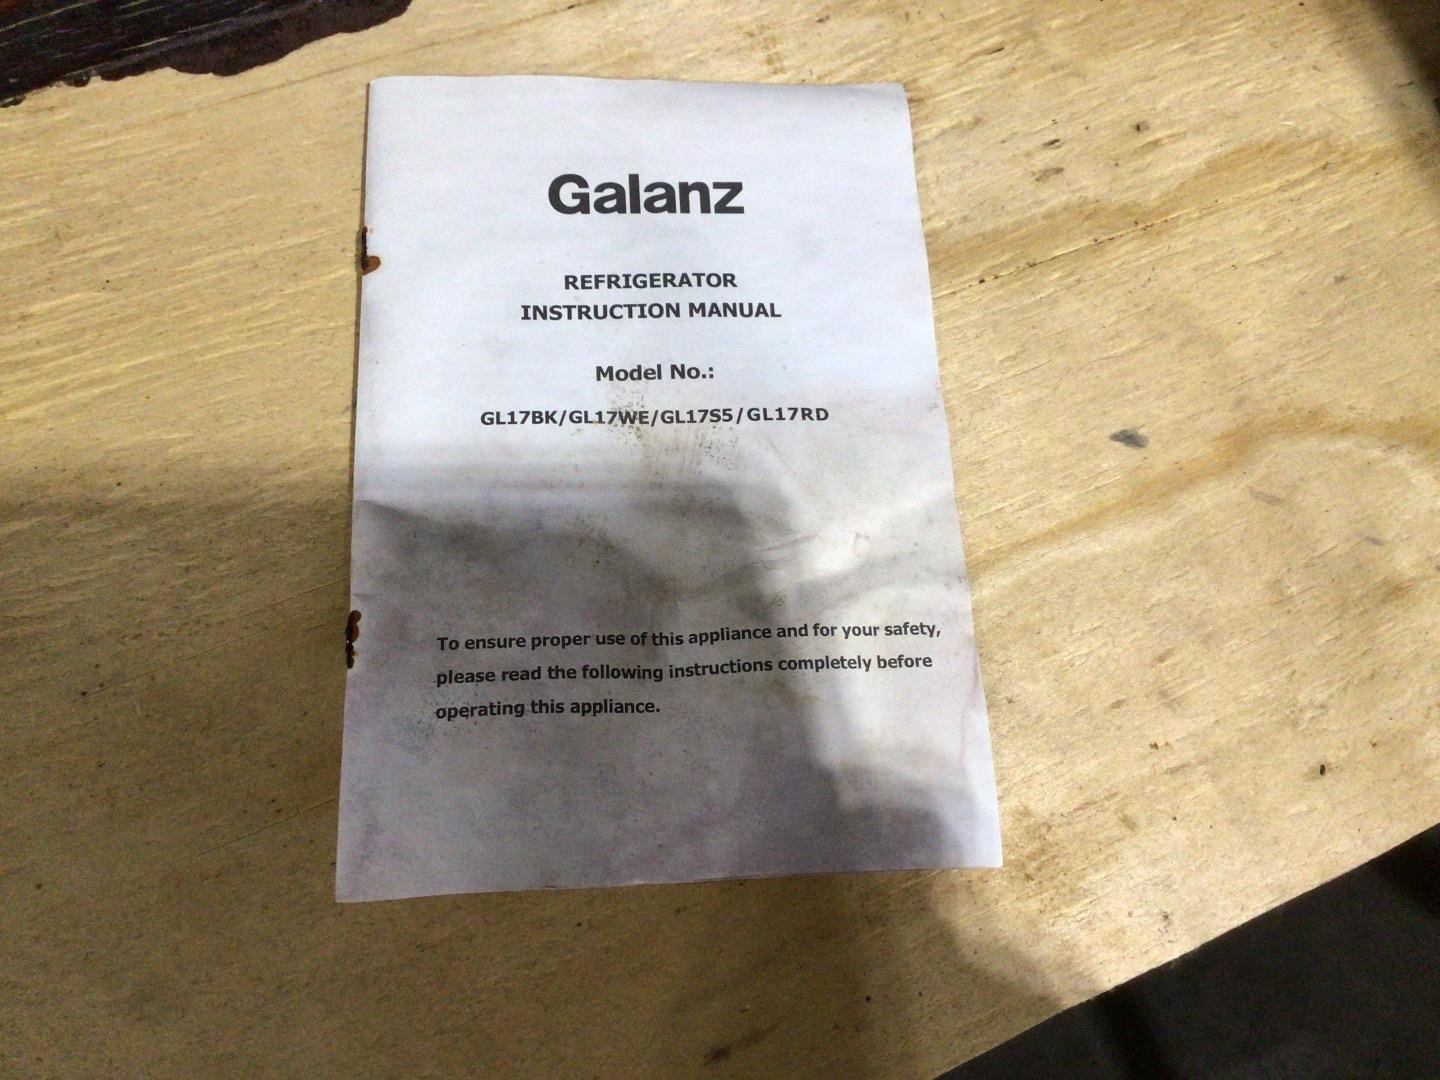 Galanz Refrigerator Instruction Manual